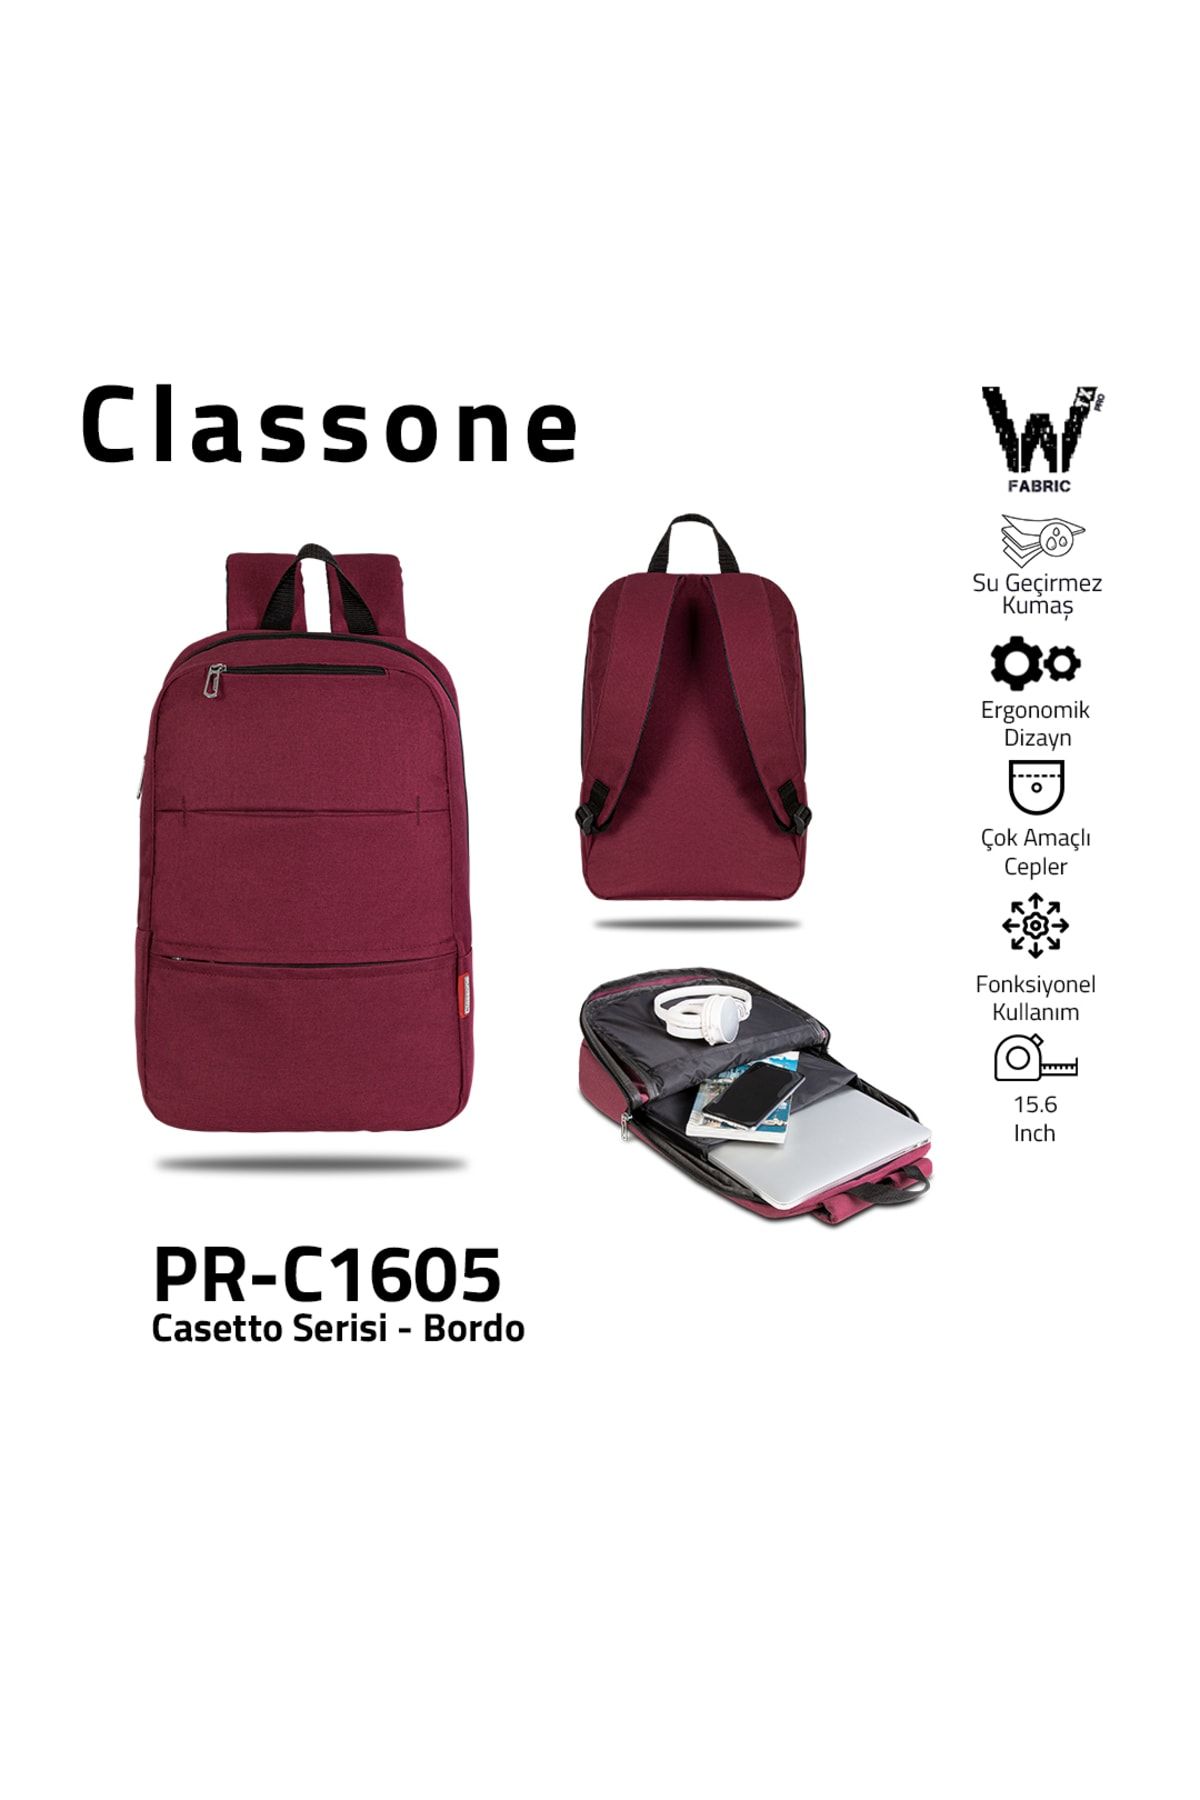 Classone PR-C1605 Casetto Serisi WTXPro,Su Geçirmez Kumaş  15.6"  Notebook, Laptop Sırt Çantası - Bordo